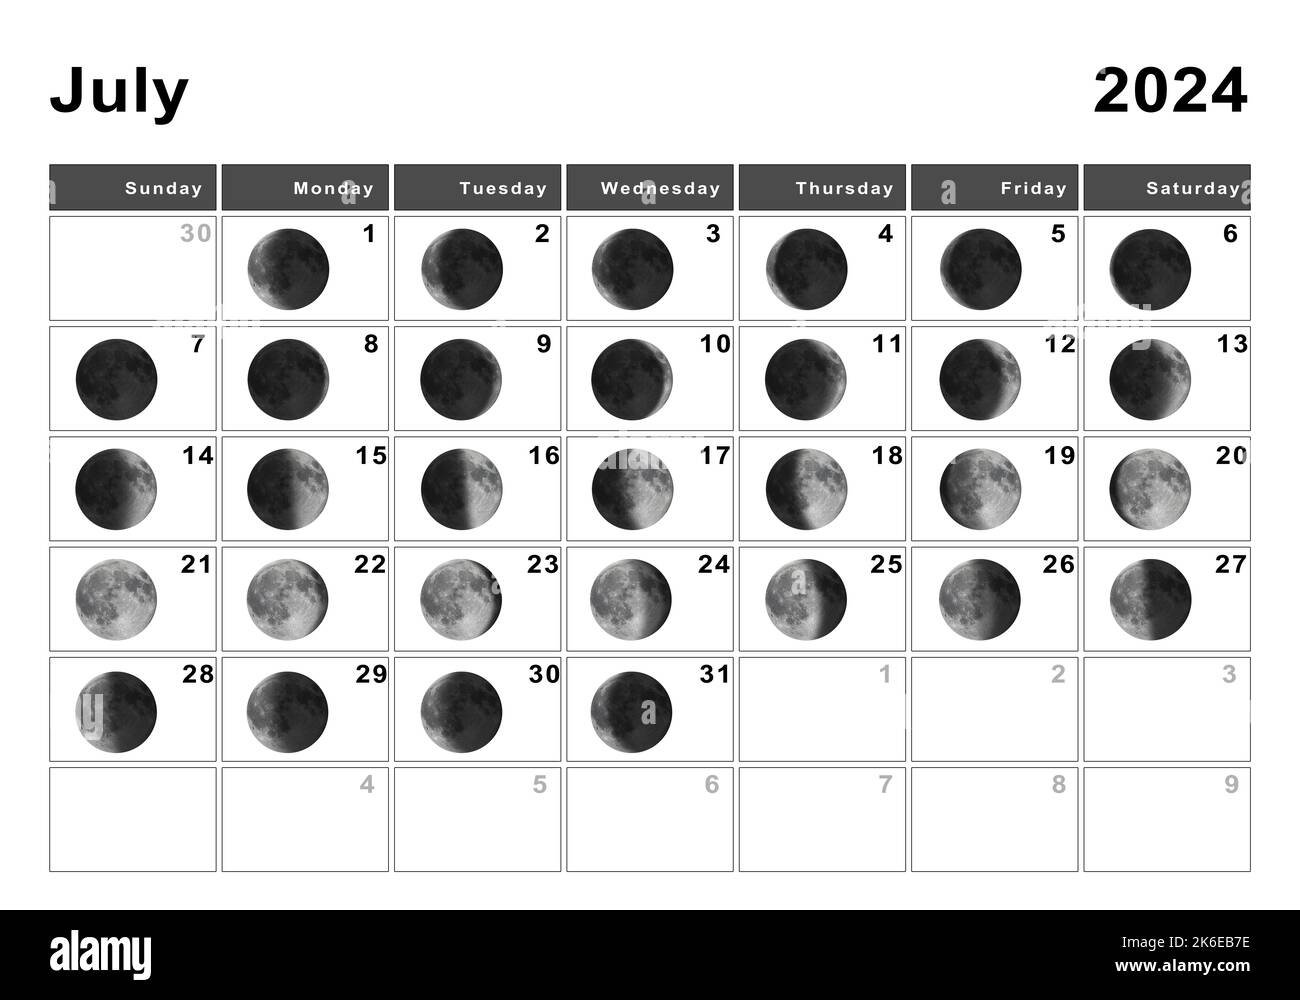 July 2024 Lunar Calendar, Moon Cycles, Moon Phases Stock Photo - Alamy | July Moon Phase Calendar 2024